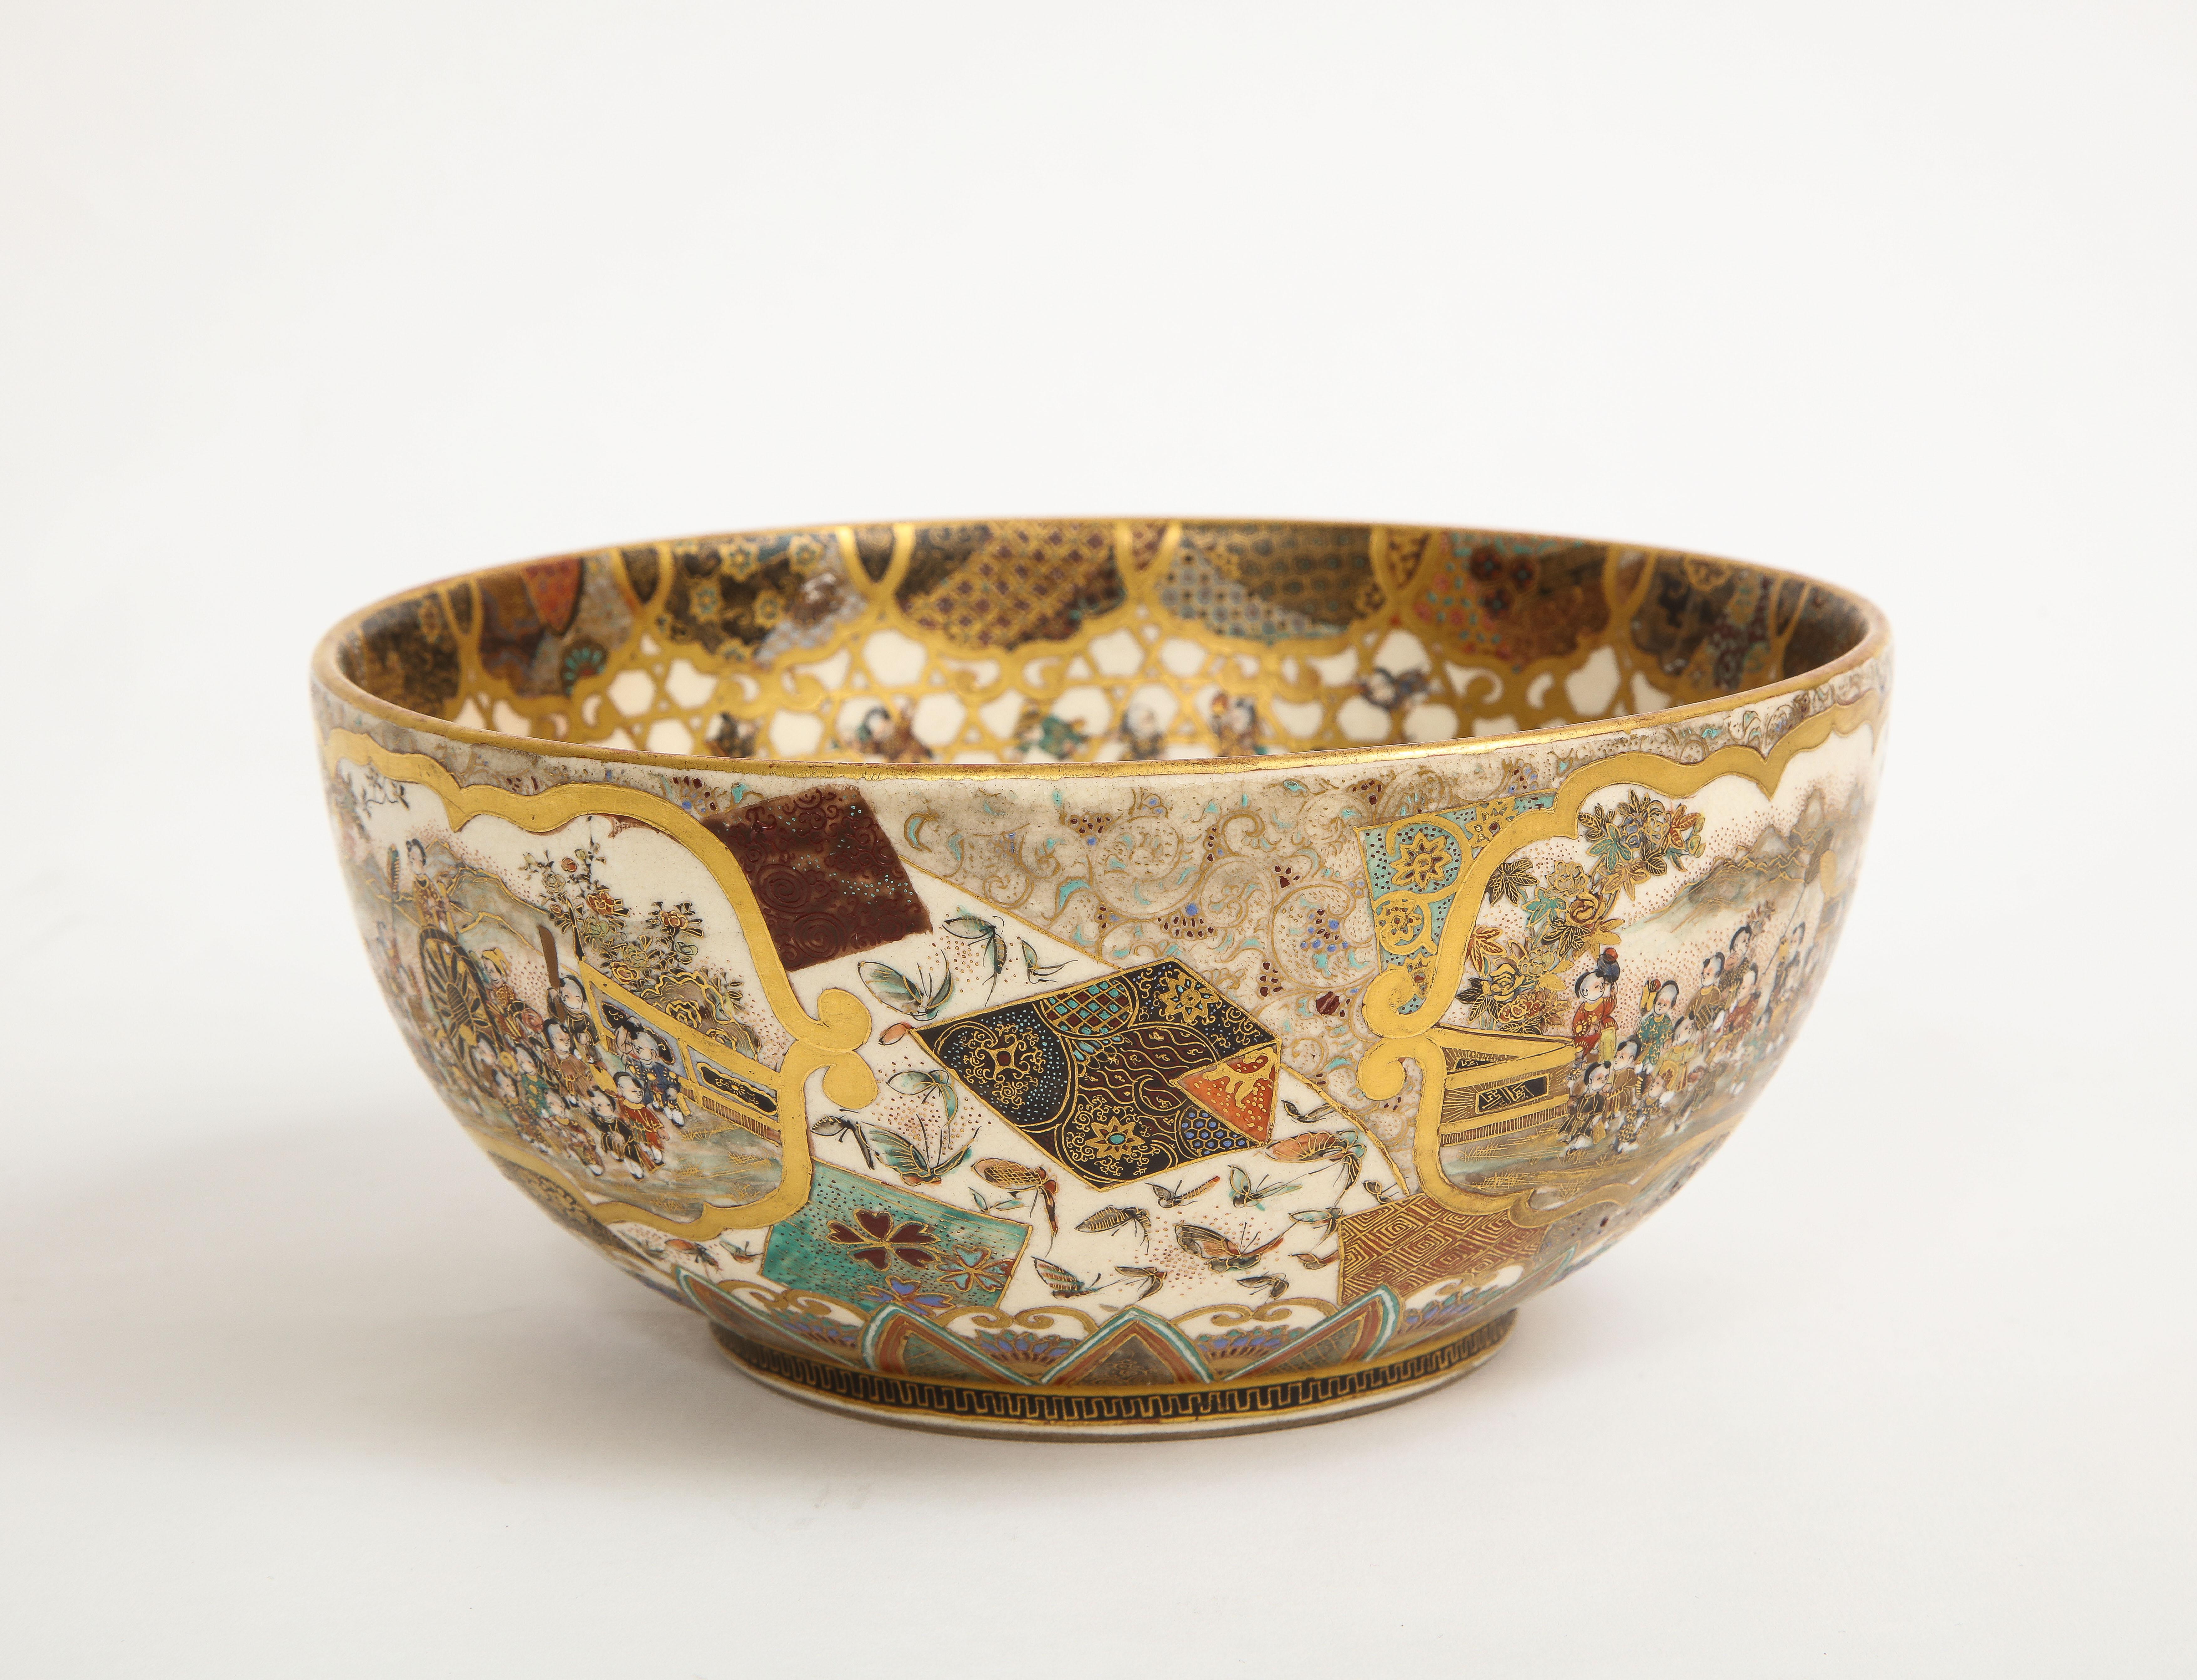 Gilt 19th C. Japanese Satsuma Bowl, Meiji Era, Probably by Meizan, Signed on Bottom